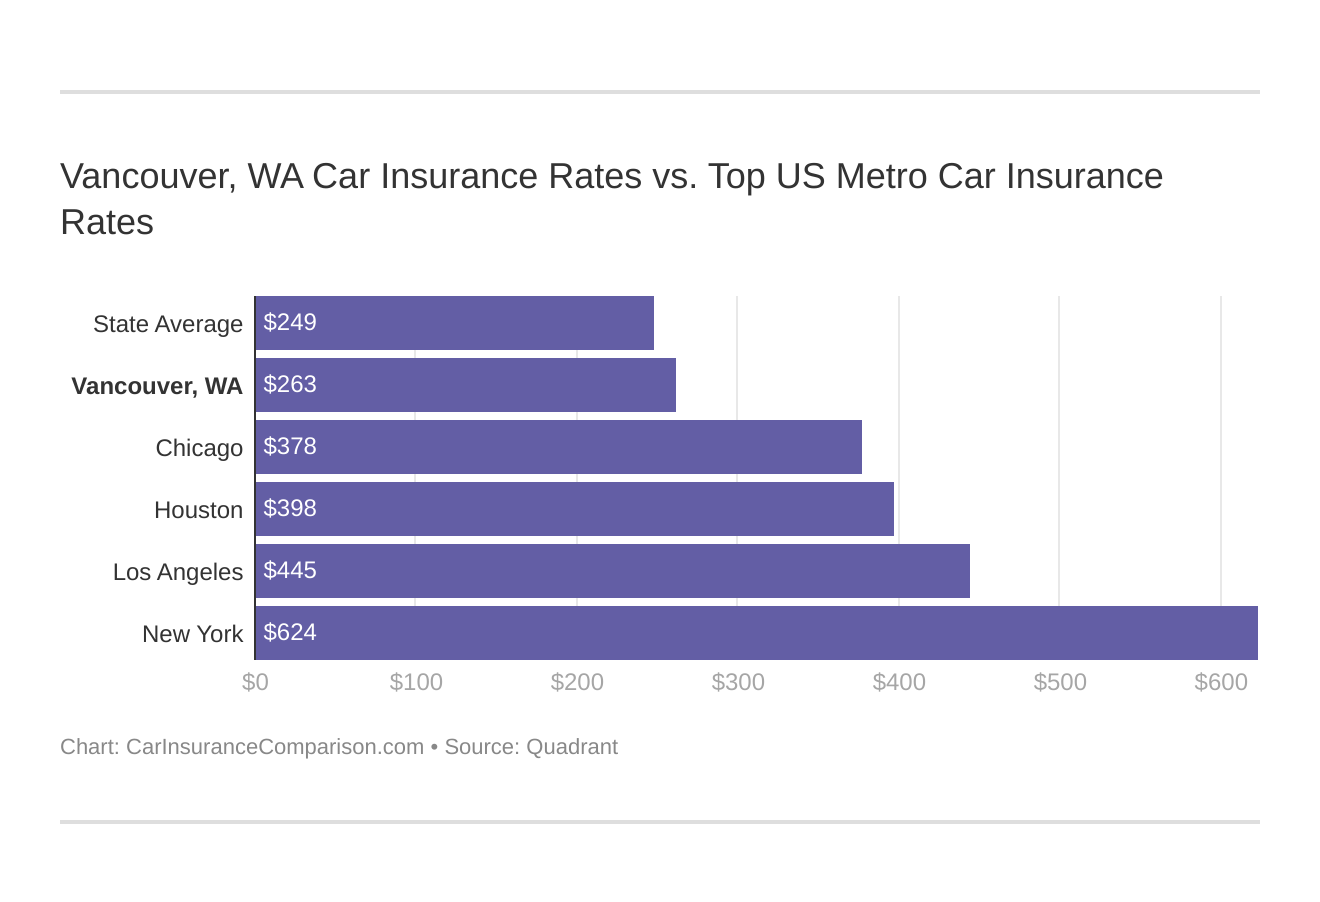 Vancouver, WA Car Insurance Rates vs. Top US Metro Car Insurance Rates